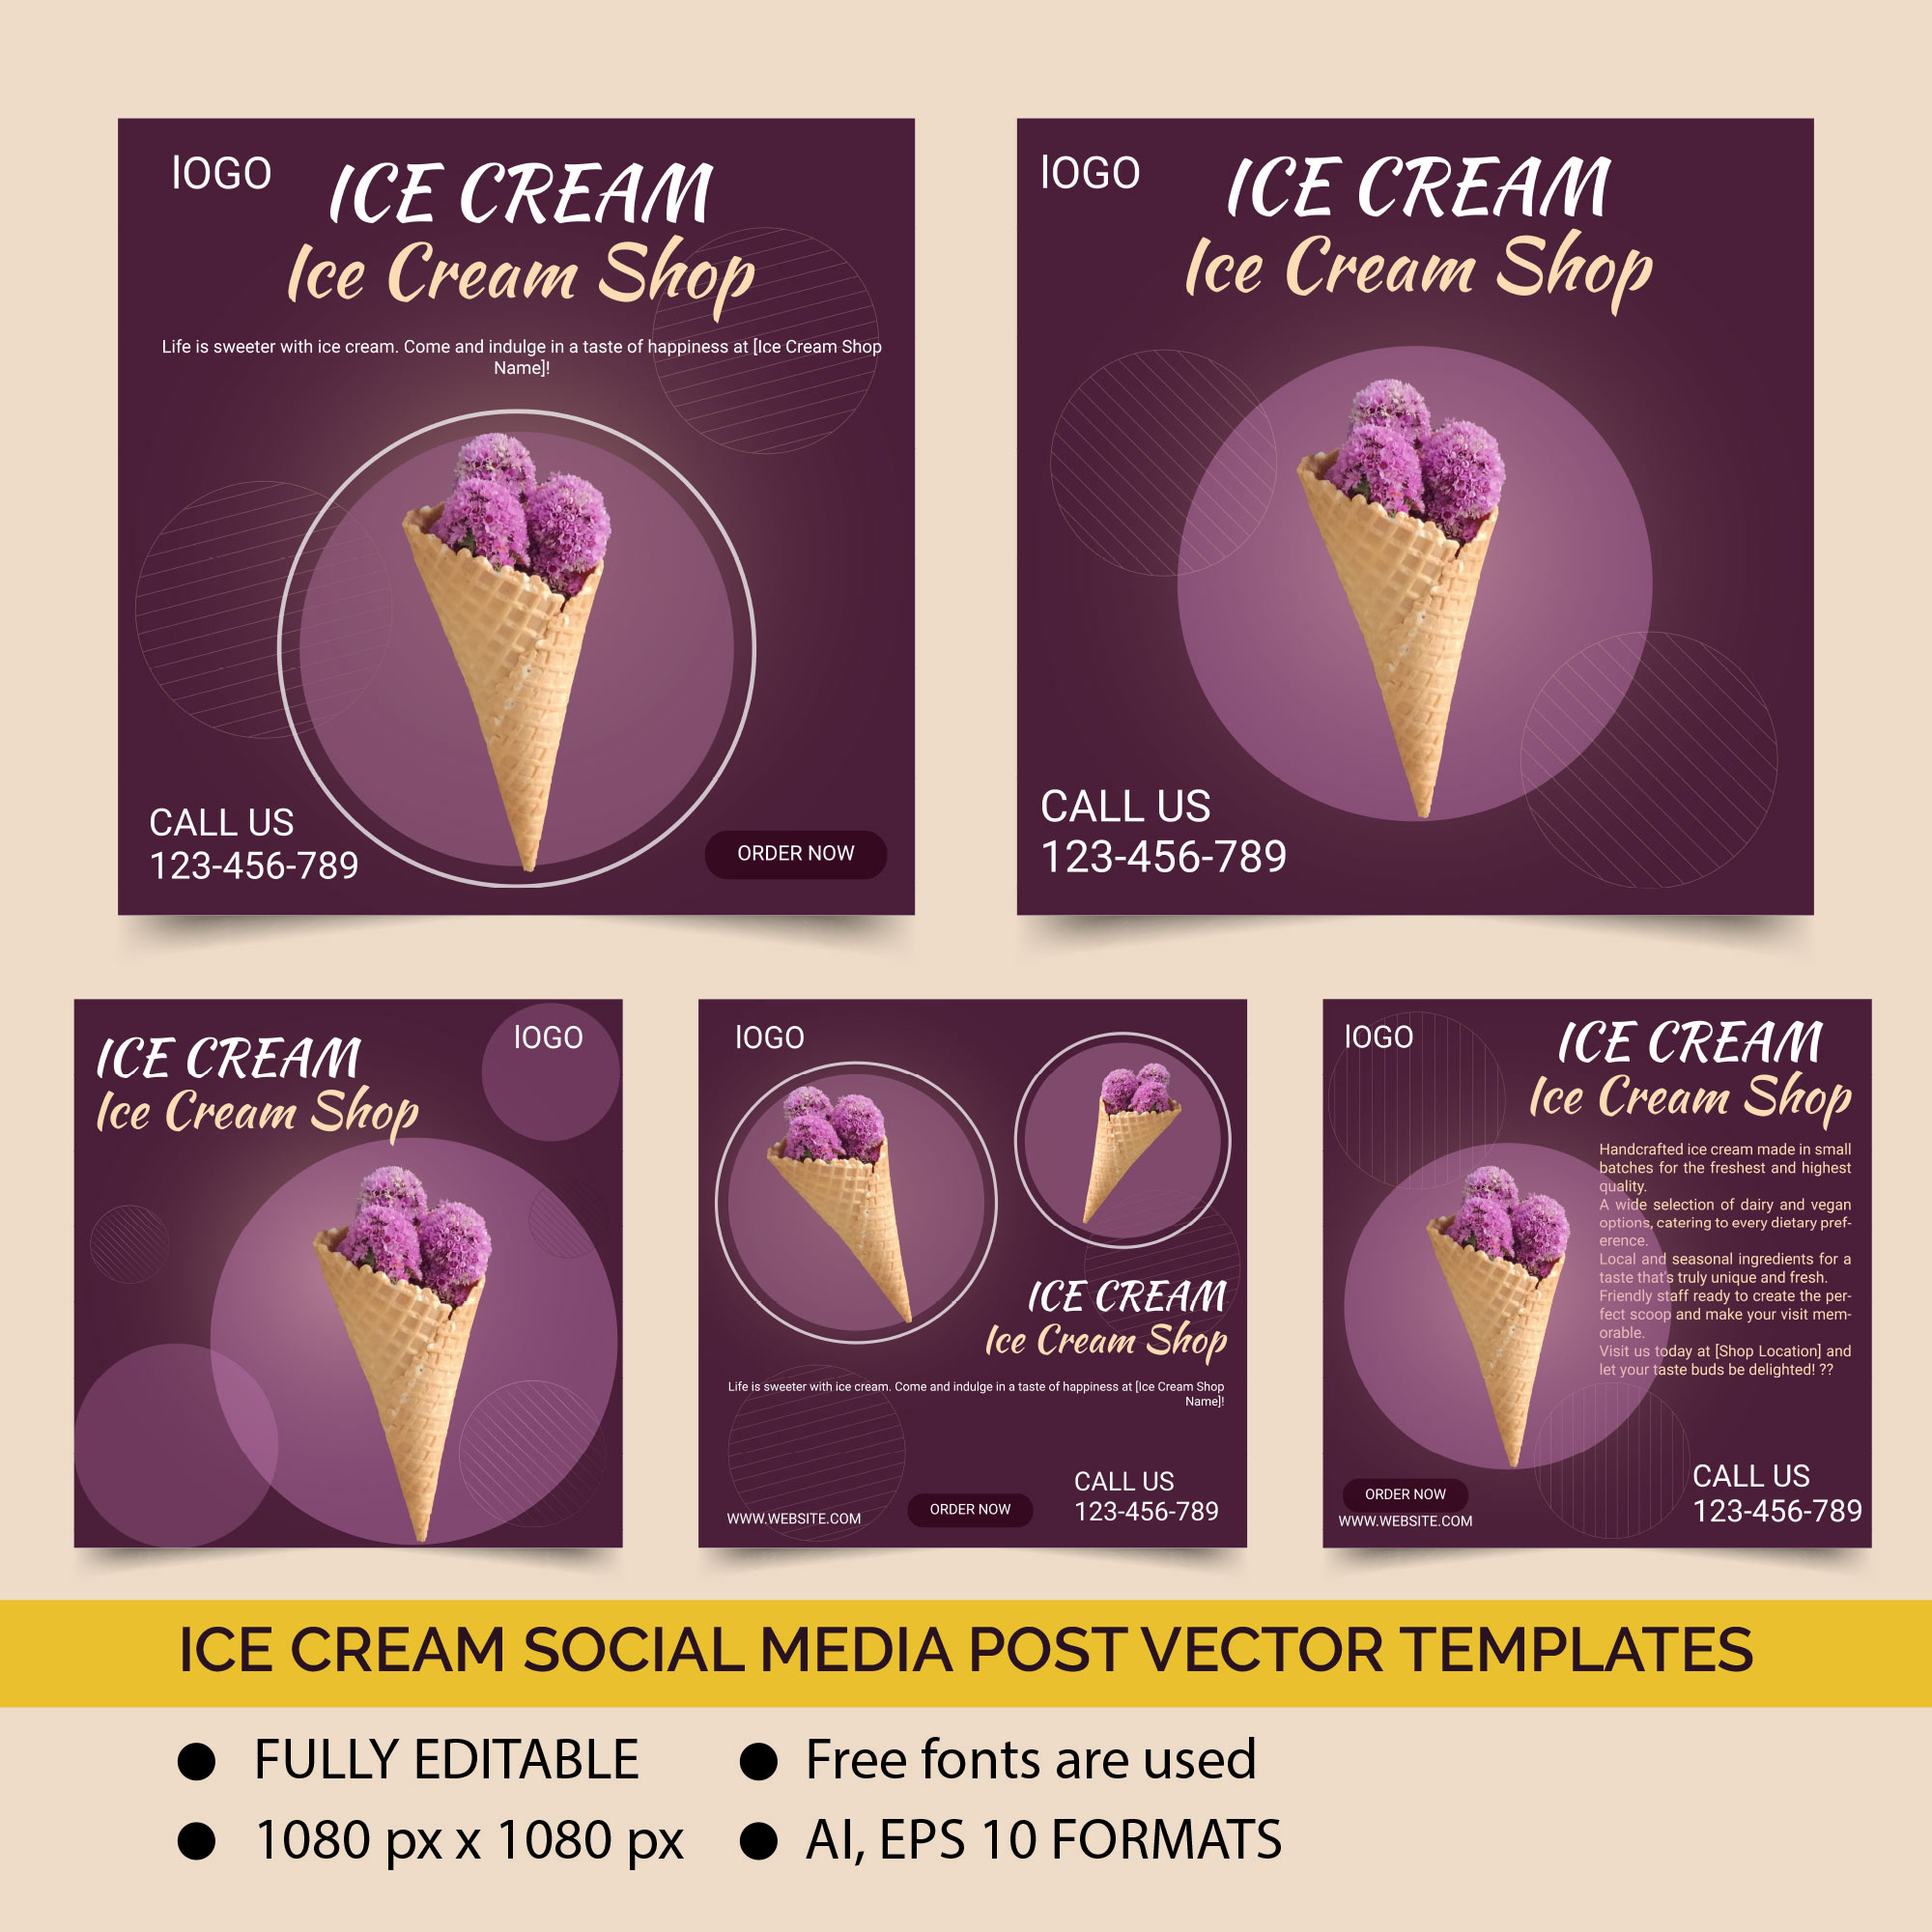 Ice cream social media post vector templates preview image.